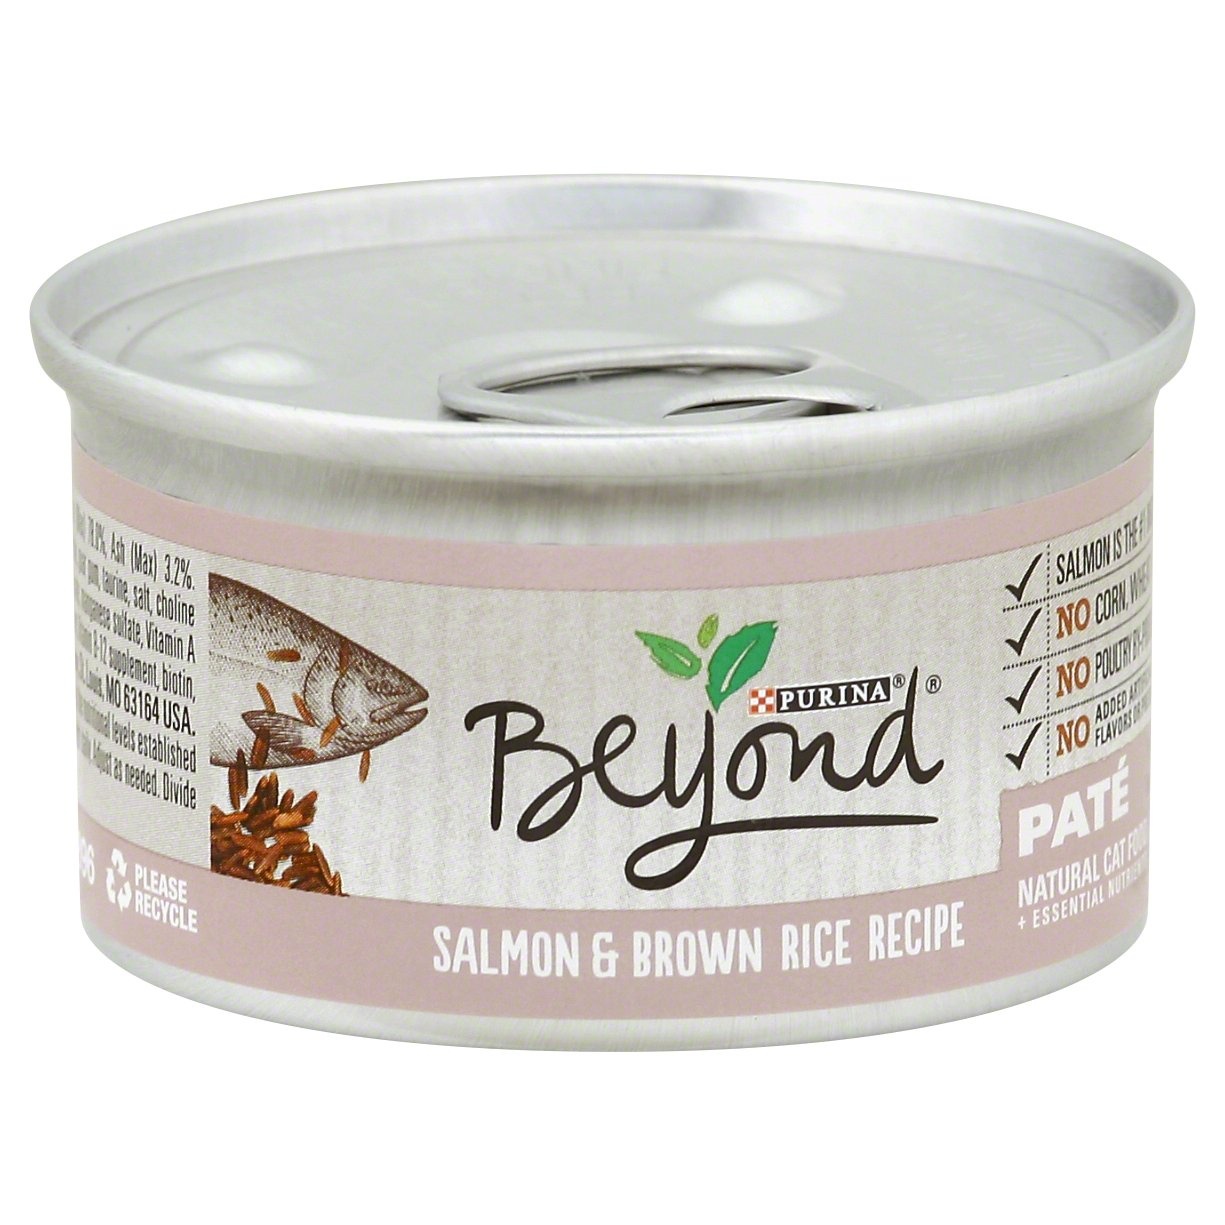 Beyond Salmon & Brown Rice Recipe Pate Cat Food 3 oz Shipt